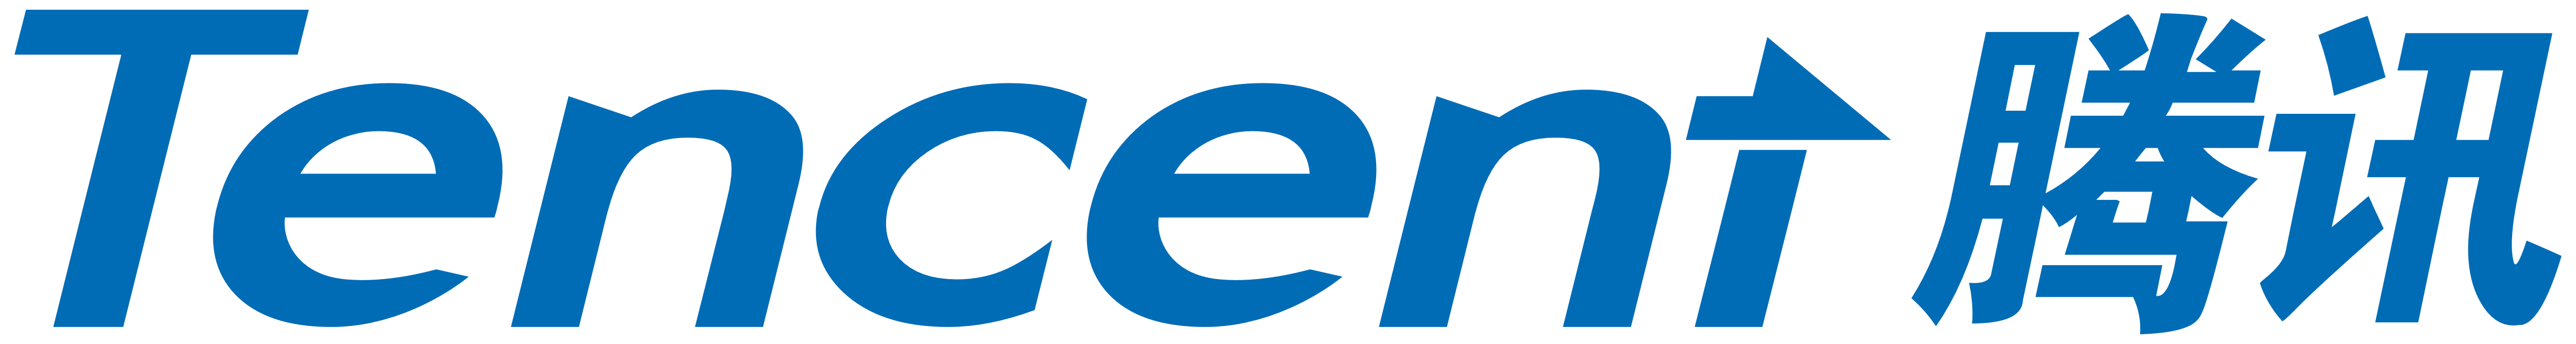 Tencent New Logo - Tencent – Logos Download